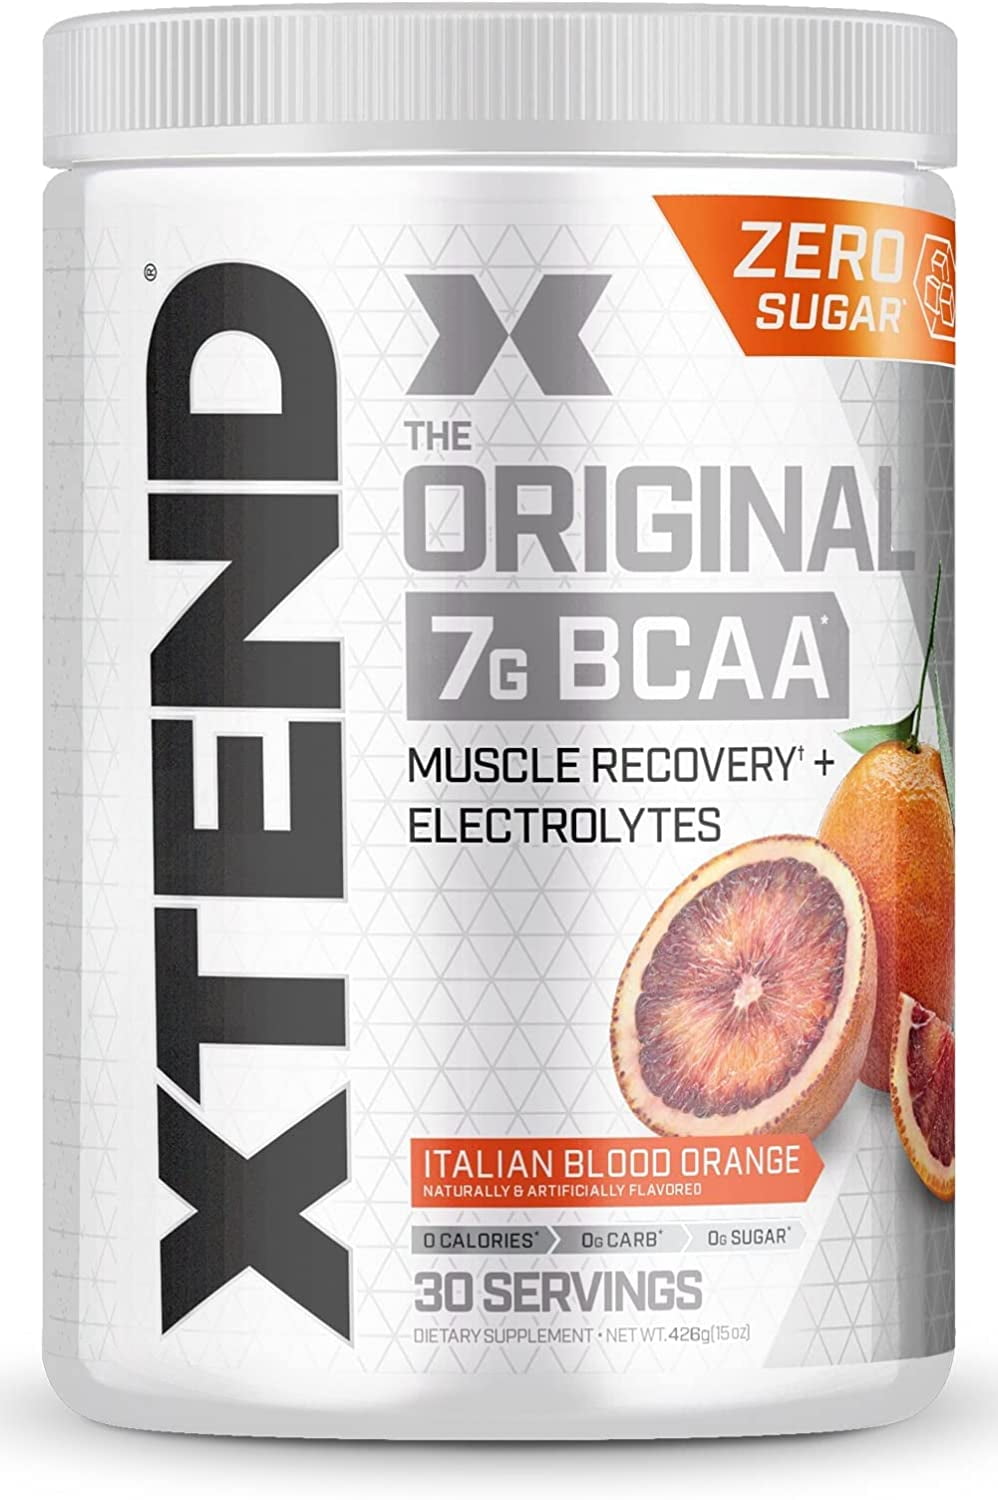 XTEND Original BCAA Powder + Italian Blood Orange + Muscle 